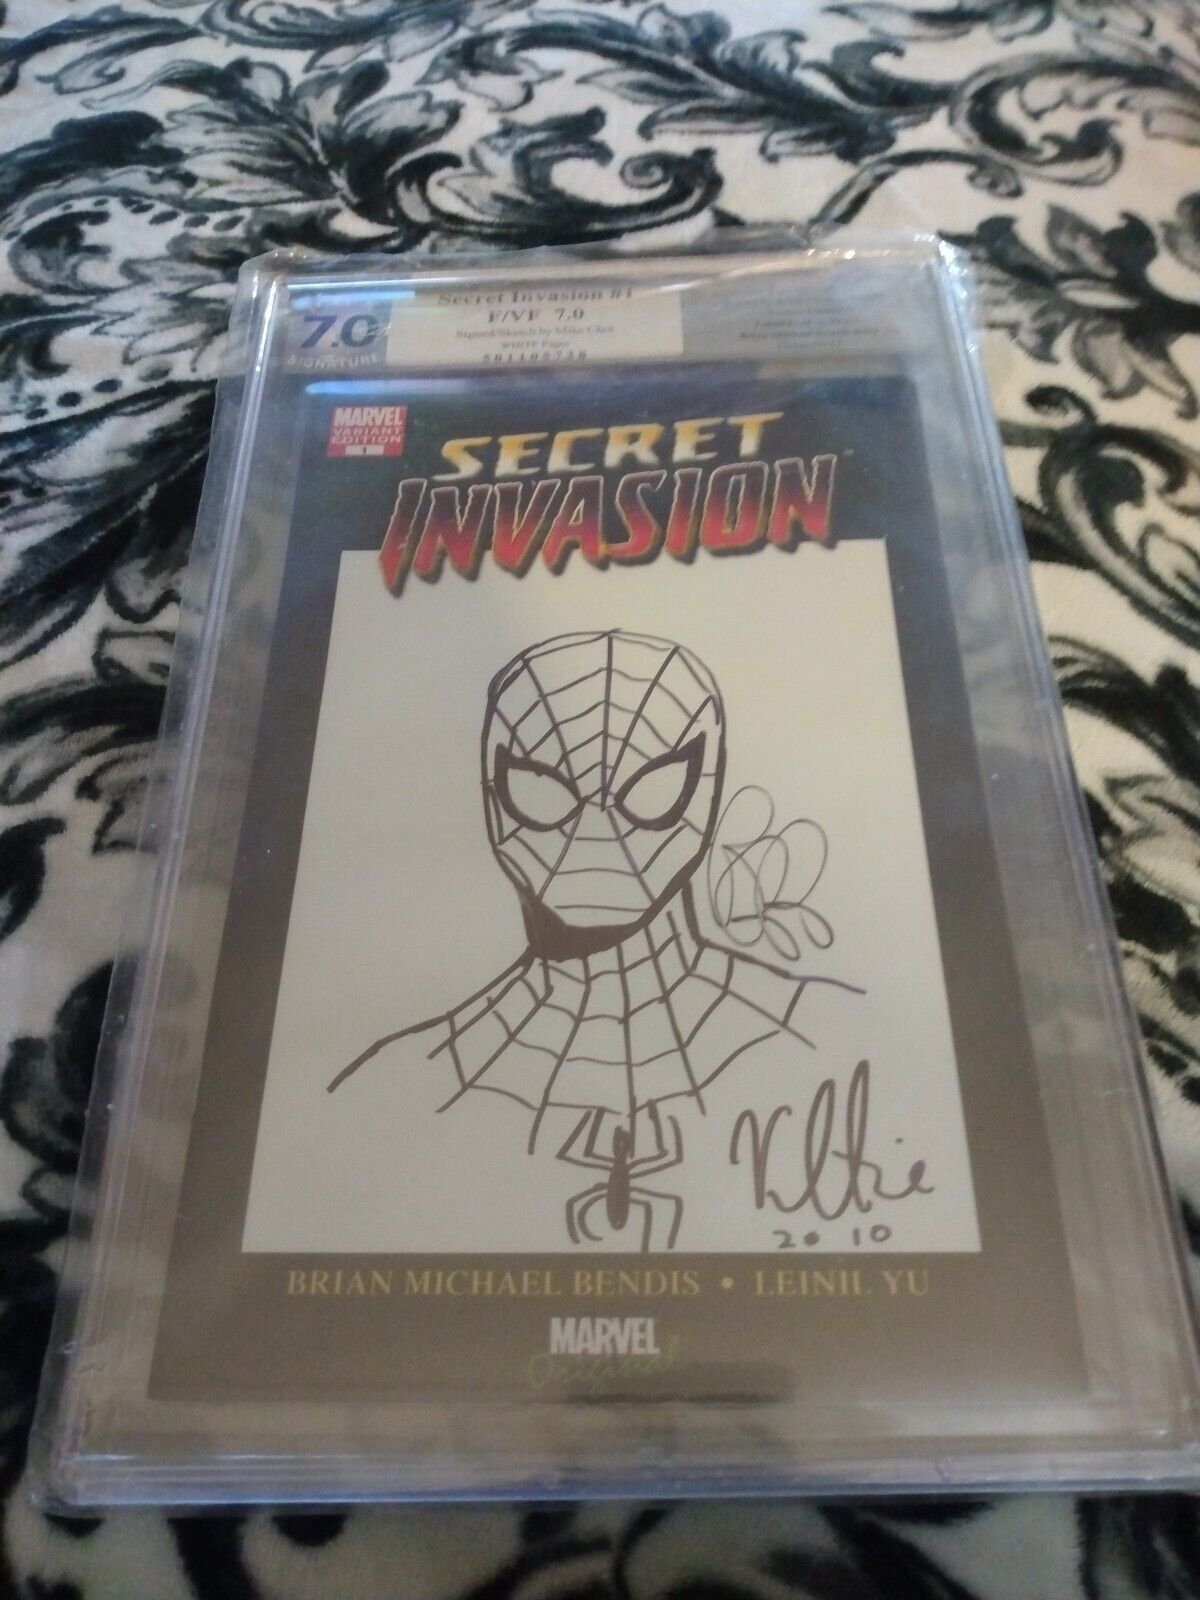 Secret Invasion#1P.G.X70 Spider Man Sketch Signed by Brian Michael Bendis